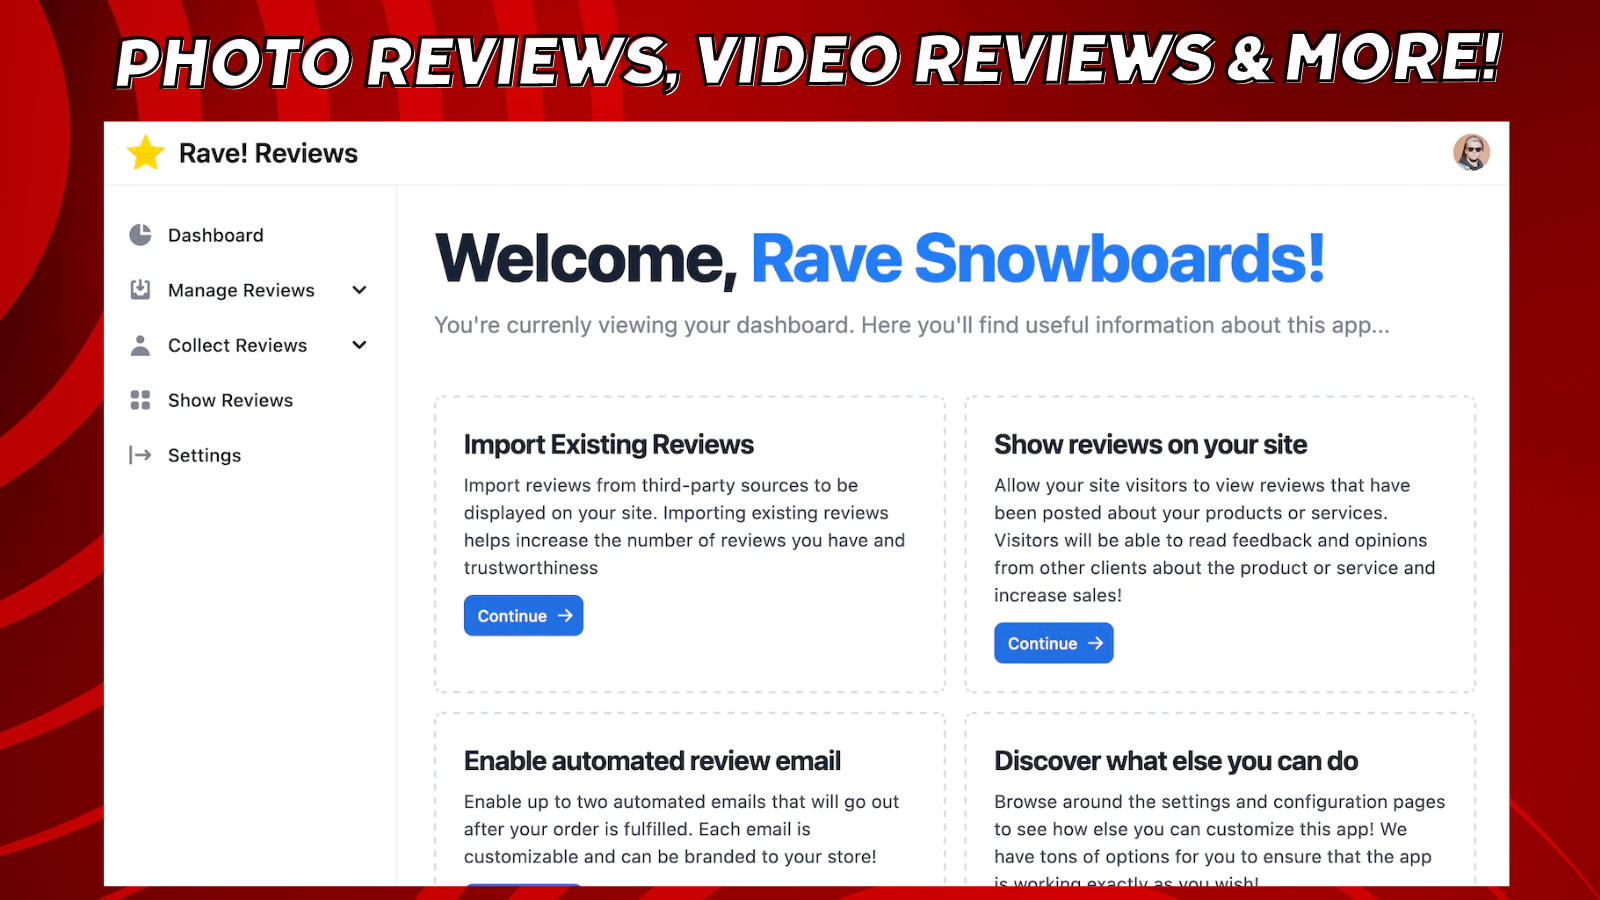 Rave! Reviews - Photo Reviews, Video Reviews & More